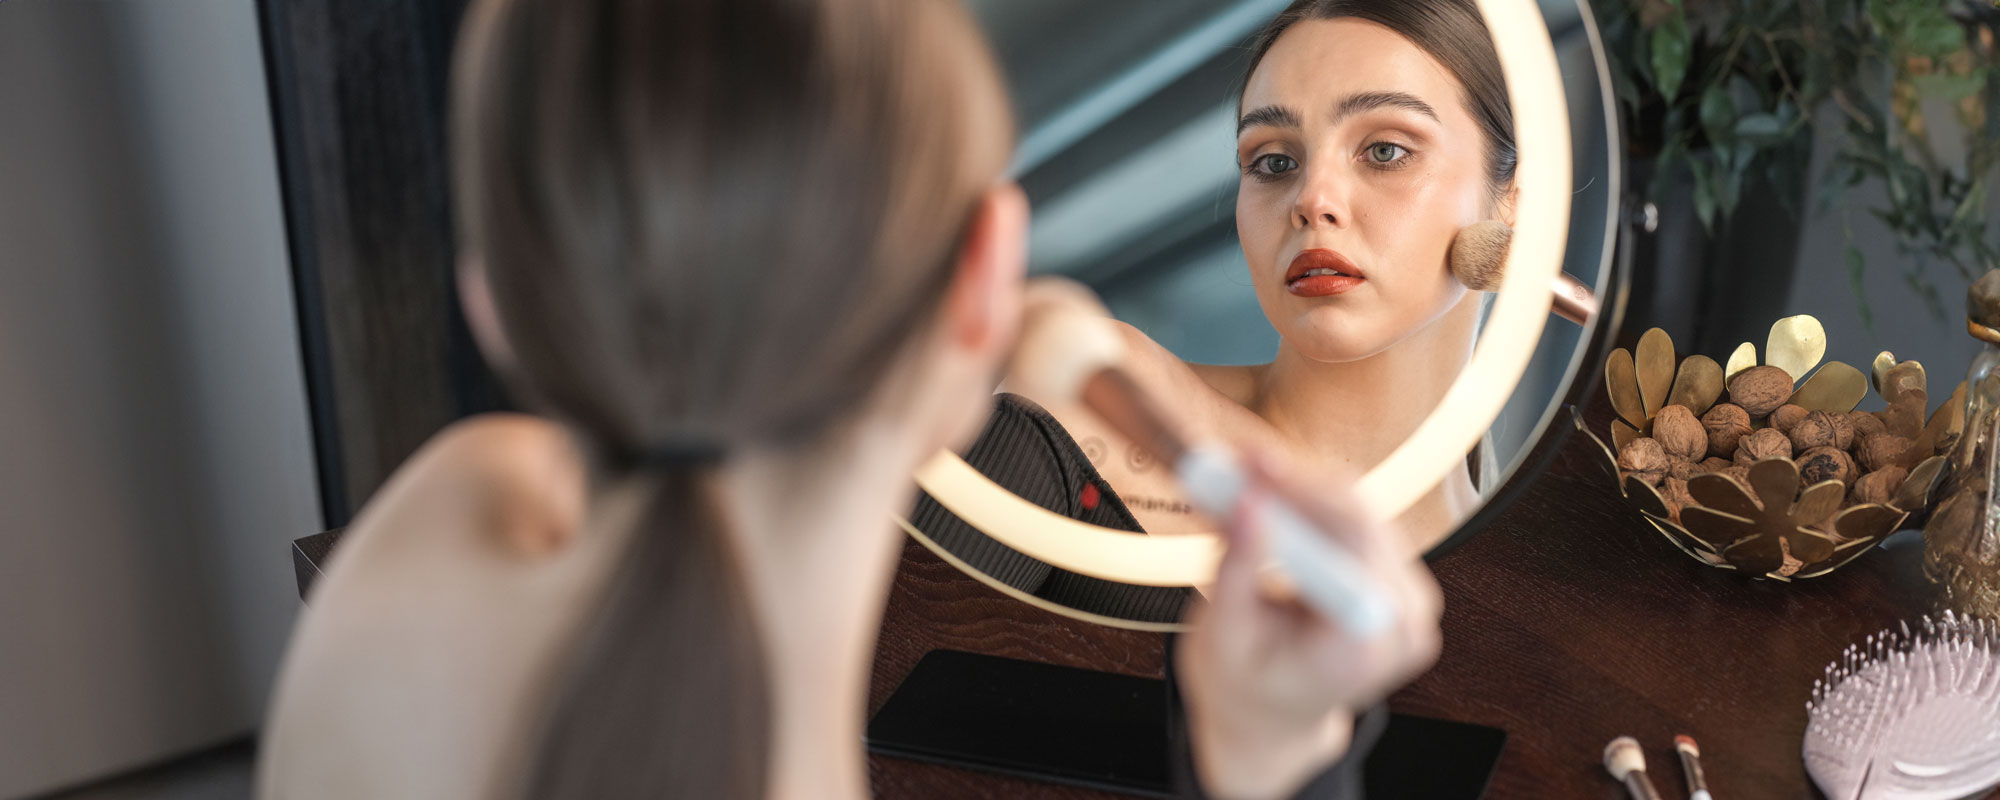 Humanas HS-HM Scarlet makeup mirror with LED lighting - black